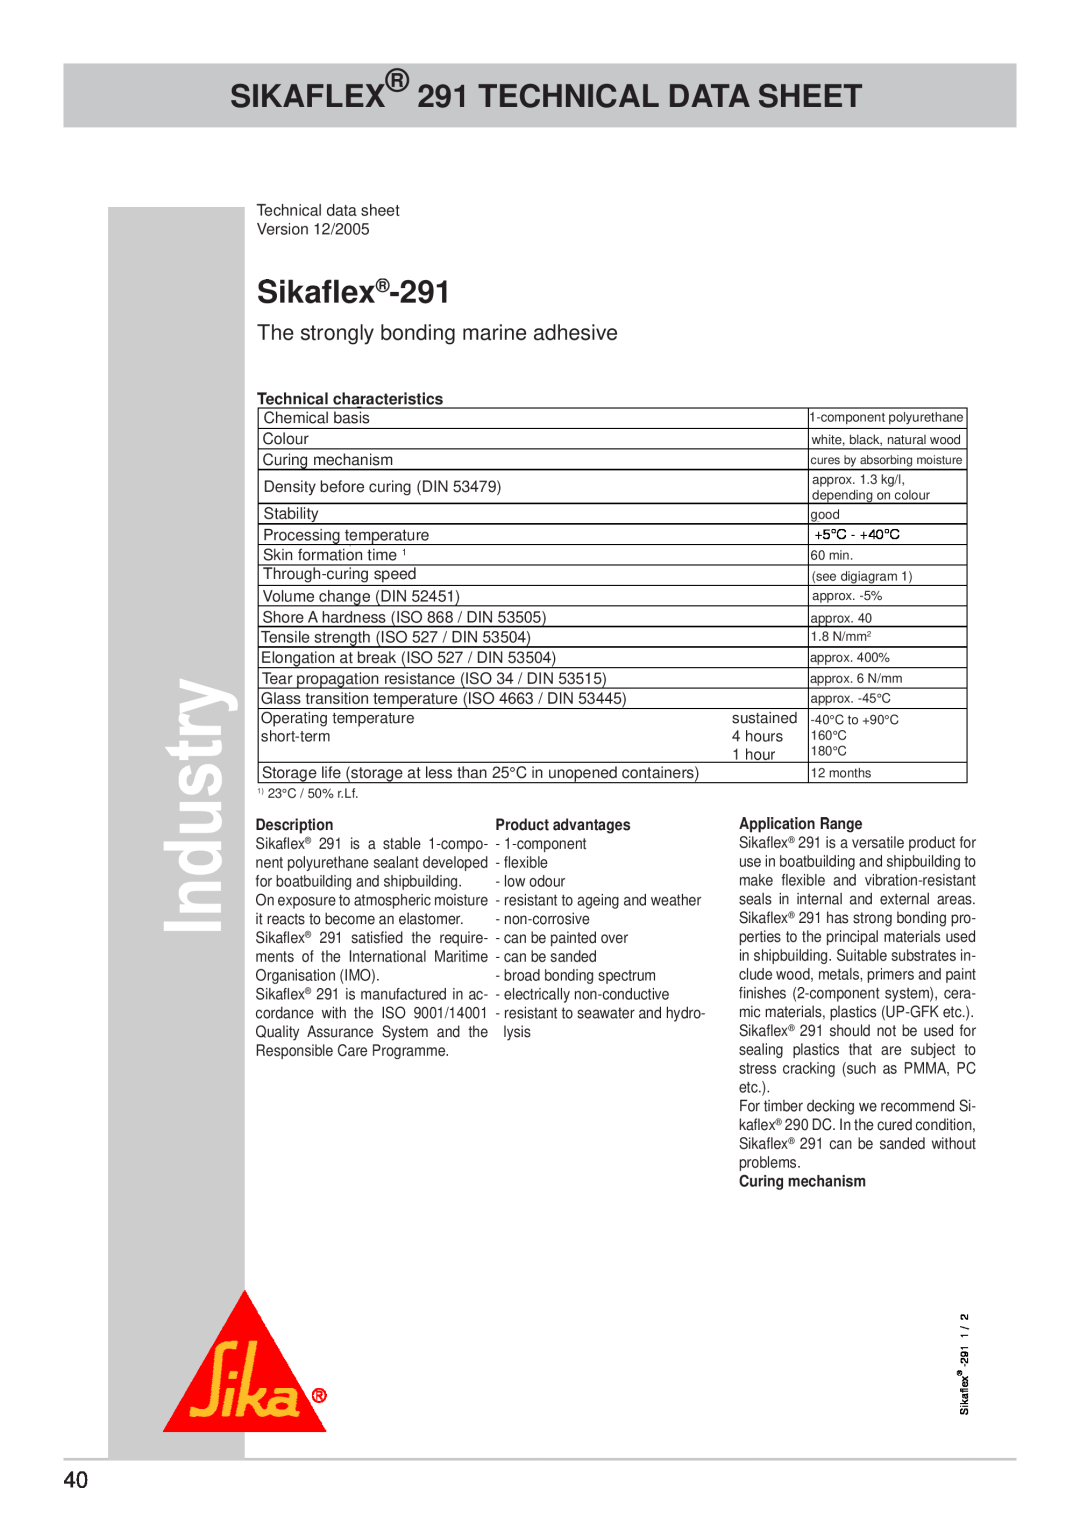 Kathrein CAP 700 SIKAFLEX 291 TECHNICAL DATA SHEET, Sikaﬂex-291, ikaflex, Der haftstarke Marine-Dichtstoff, Chemical basis 